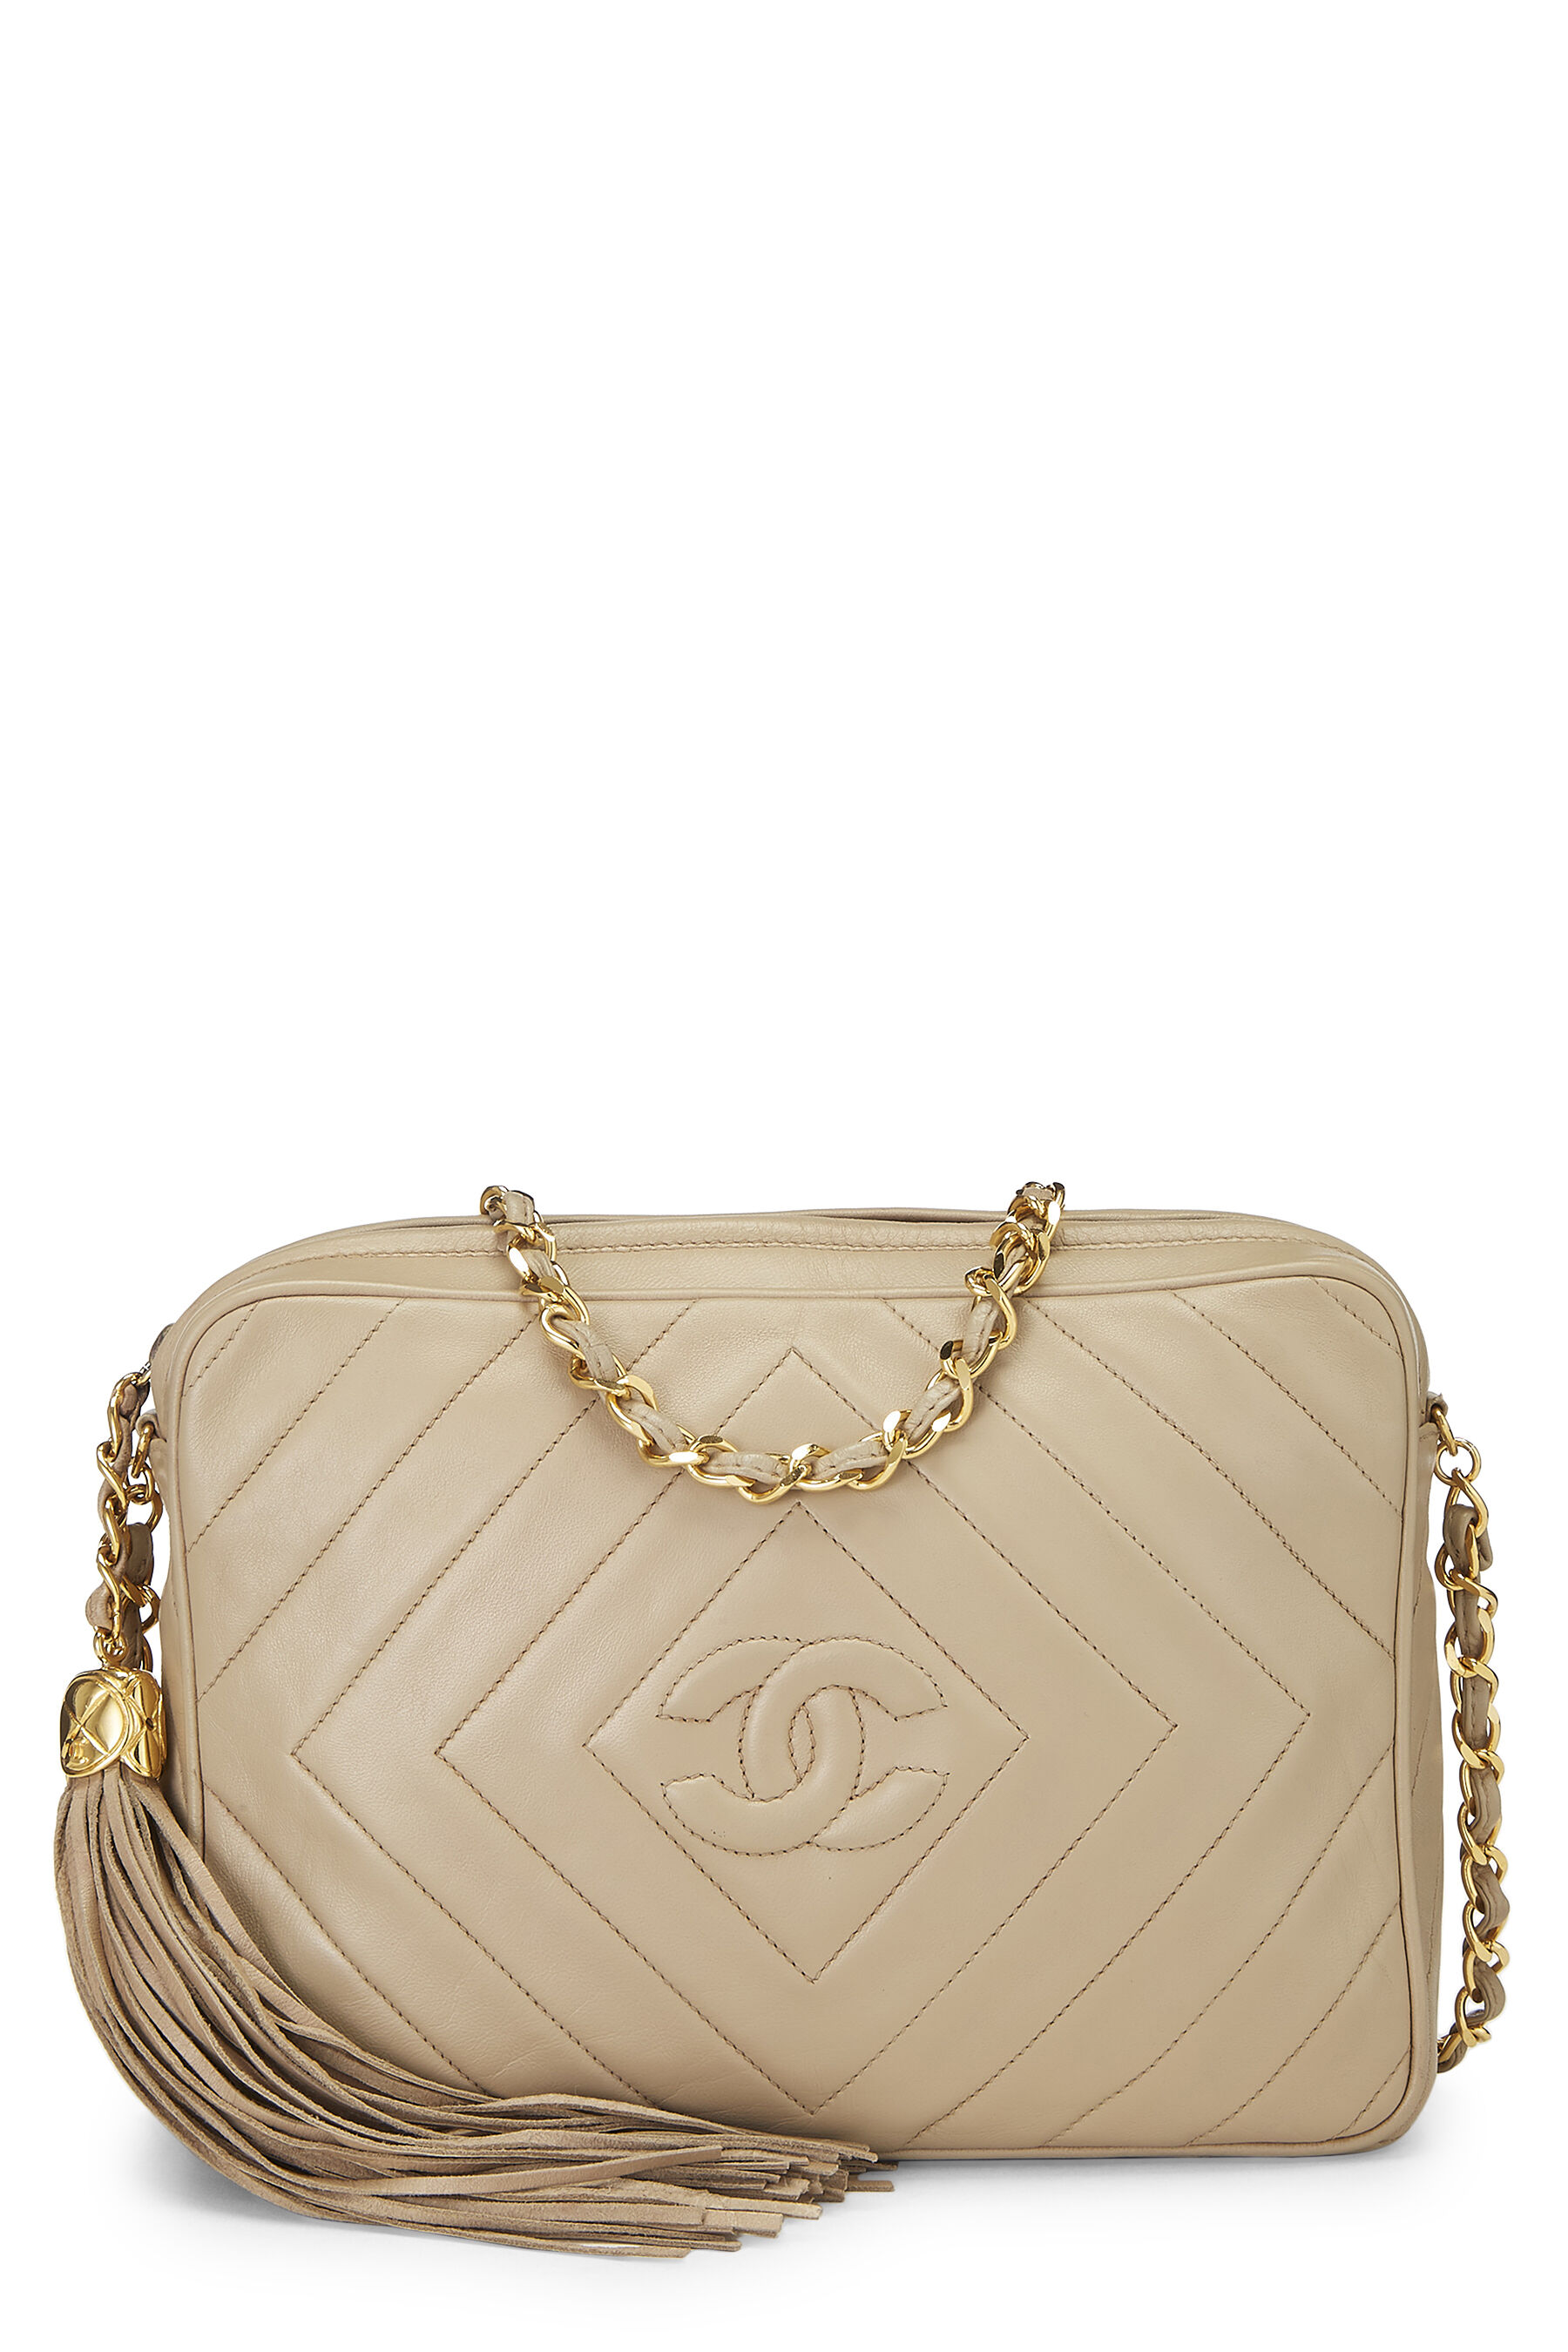 Chanel - Beige Lambskin Diamond 'CC' Camera Bag Medium